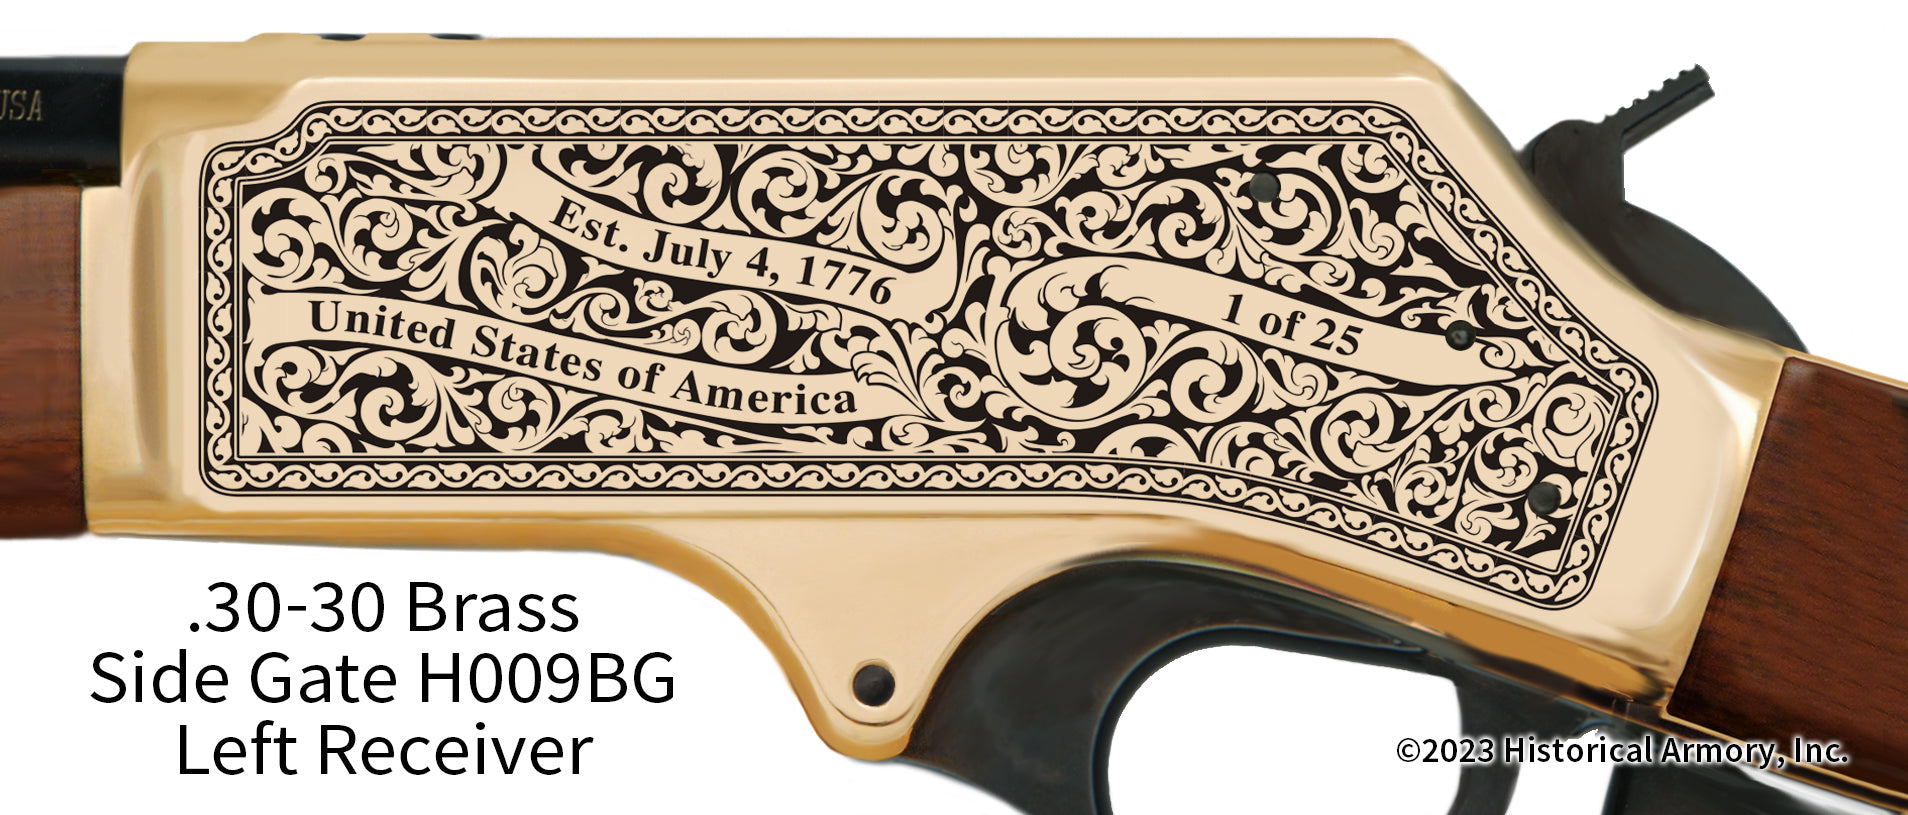 Hancock County Mississippi Engraved Henry .30-30 Brass Side Gate Rifle